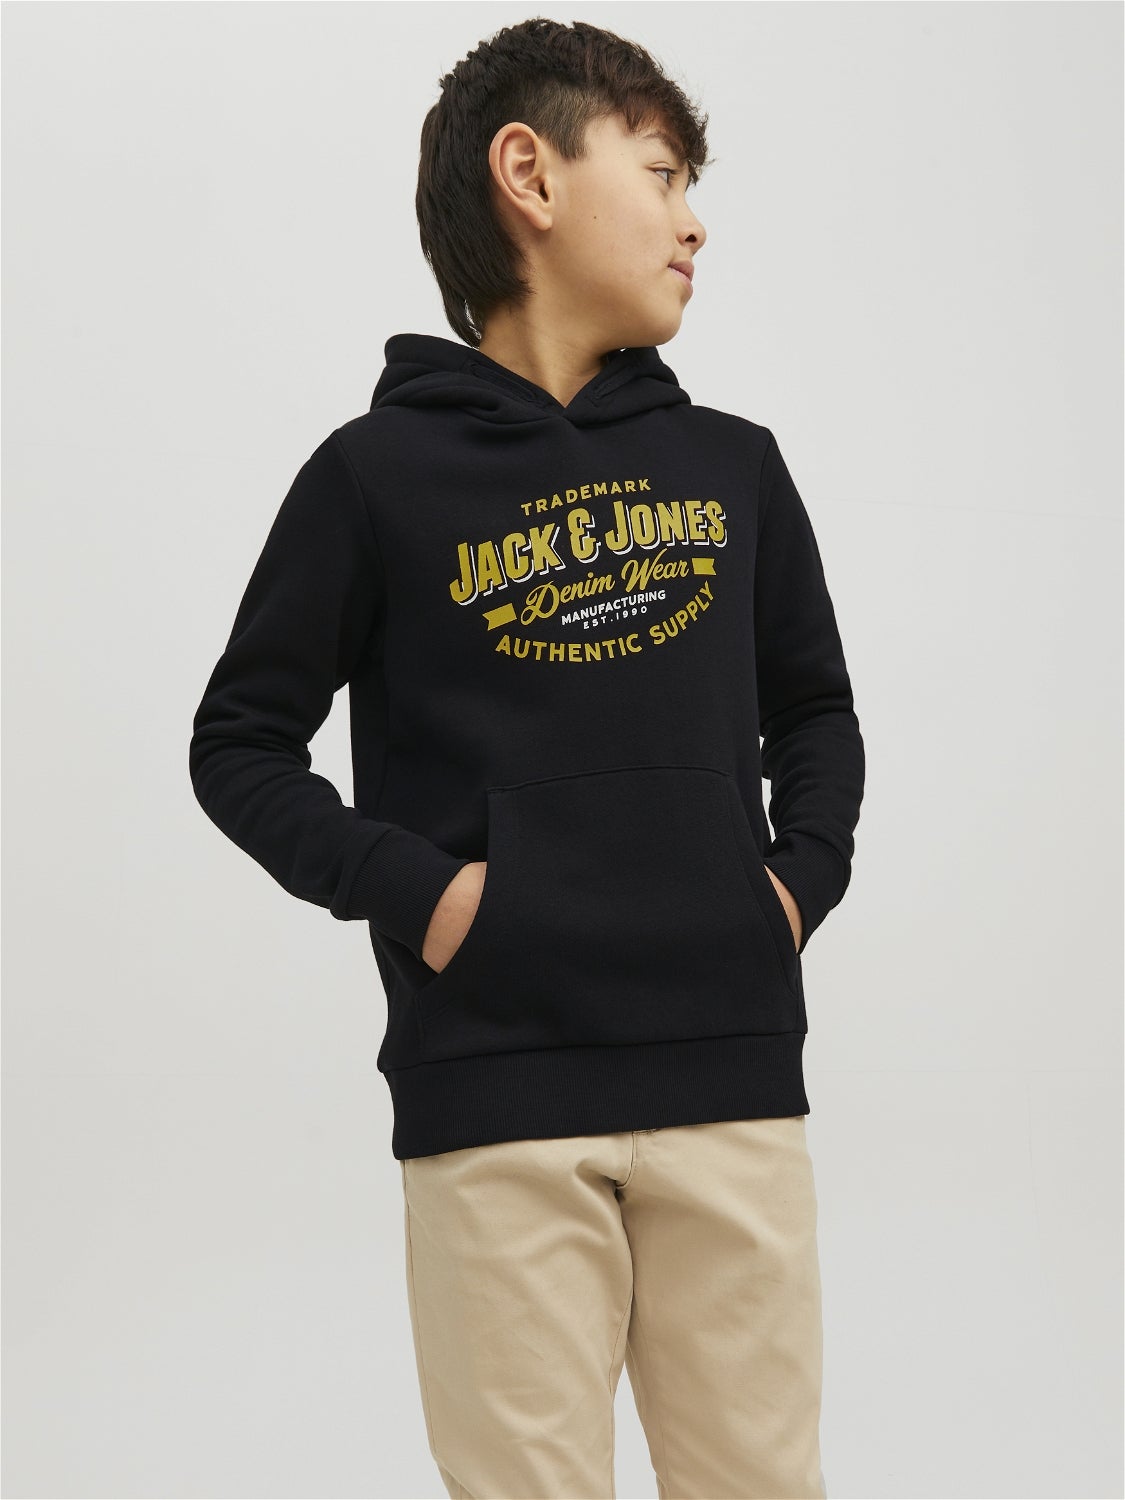 Blue/White 152                  EU Jack & Jones sweatshirt discount 62% KIDS FASHION Jumpers & Sweatshirts Sports 